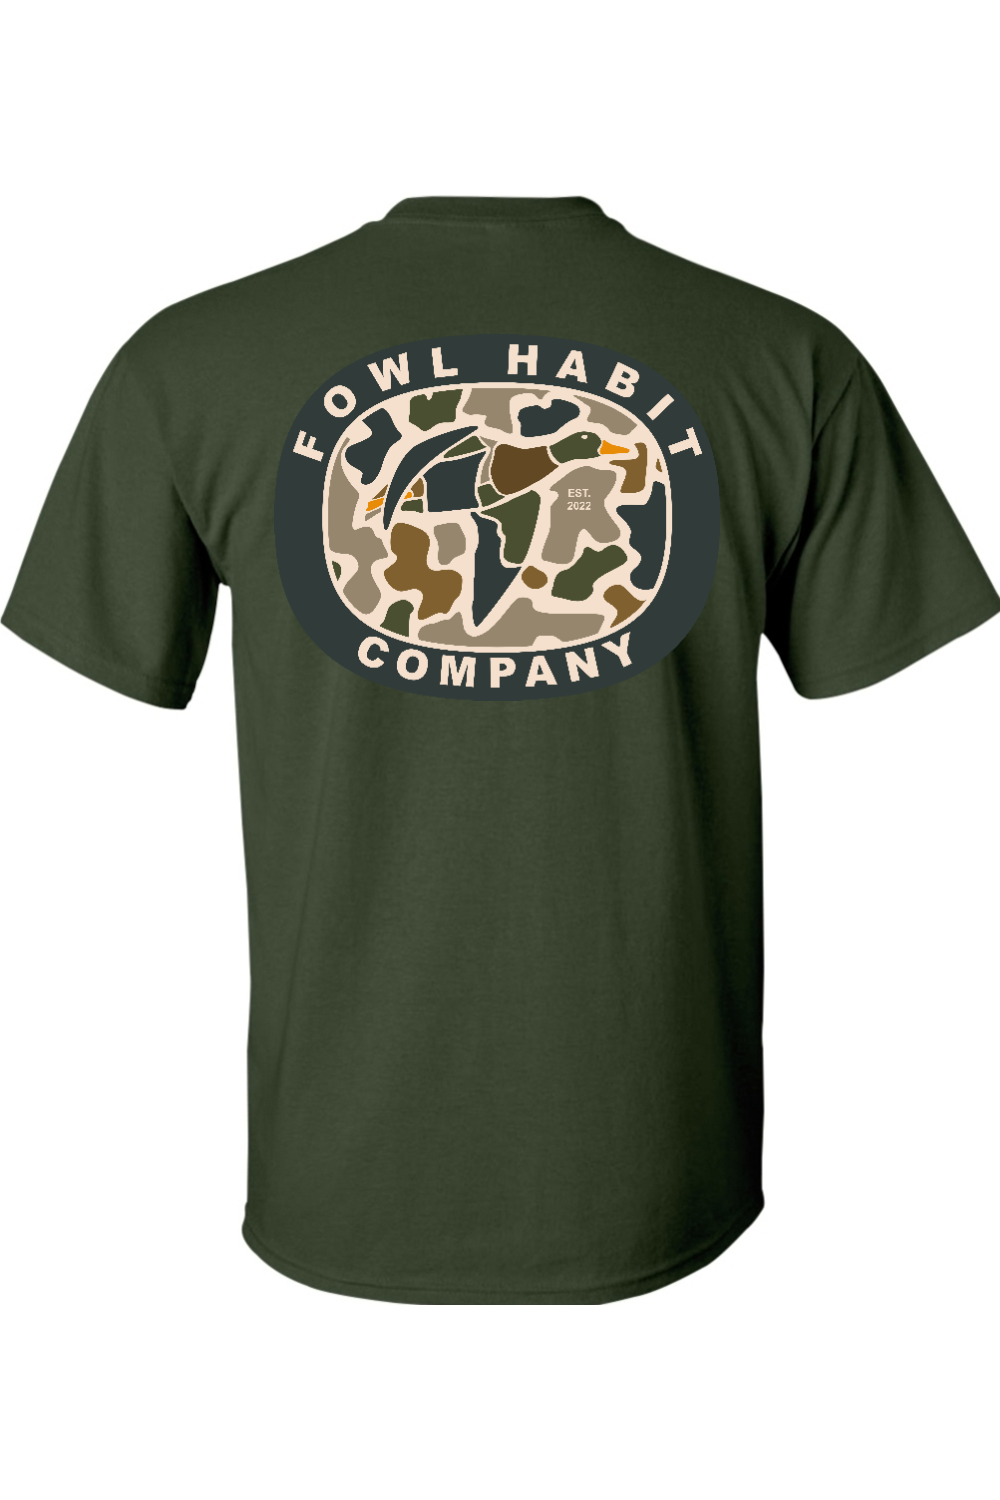 Old School Camo T-Shirt - Fowl Habit Co.